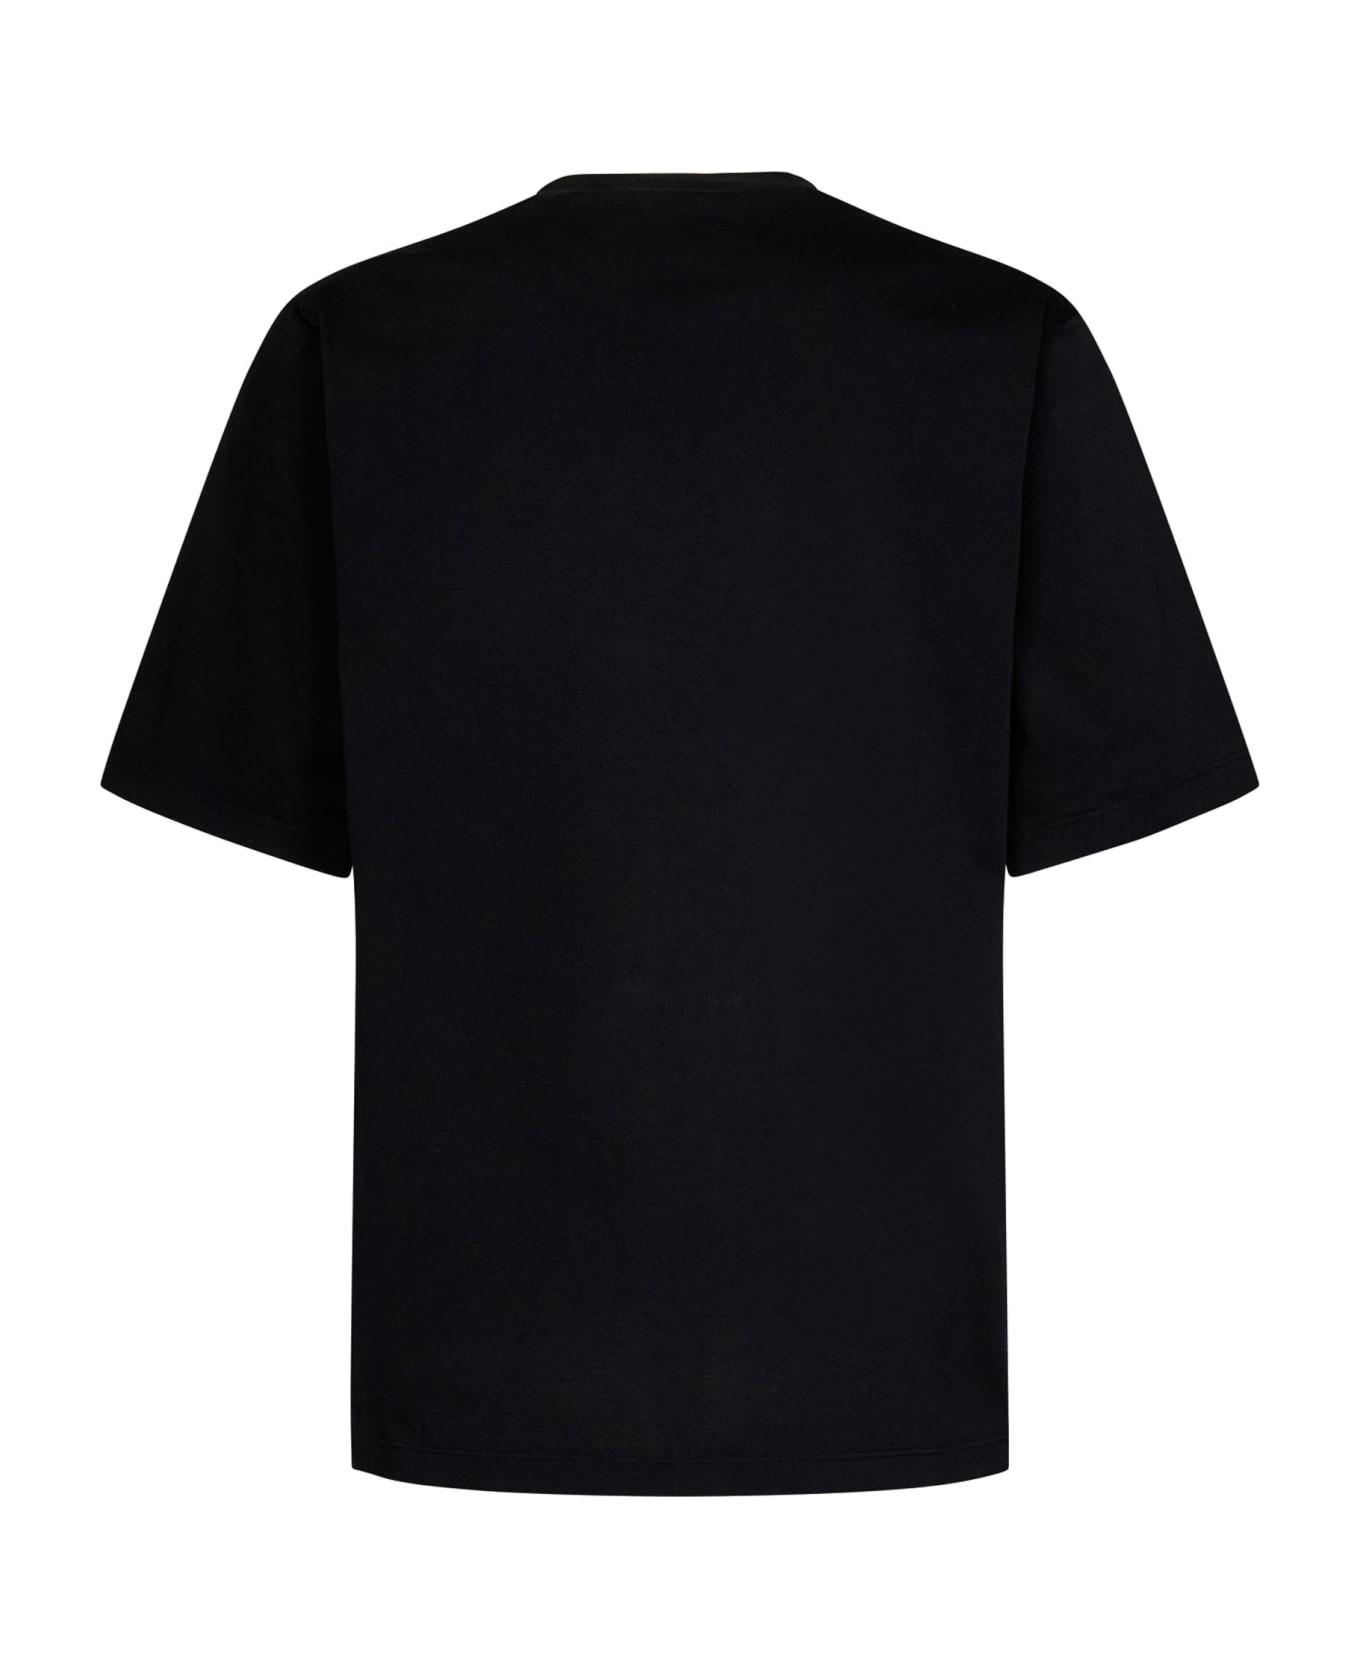 Dsquared2 Bob Markley Skater Black T-shirt - Black